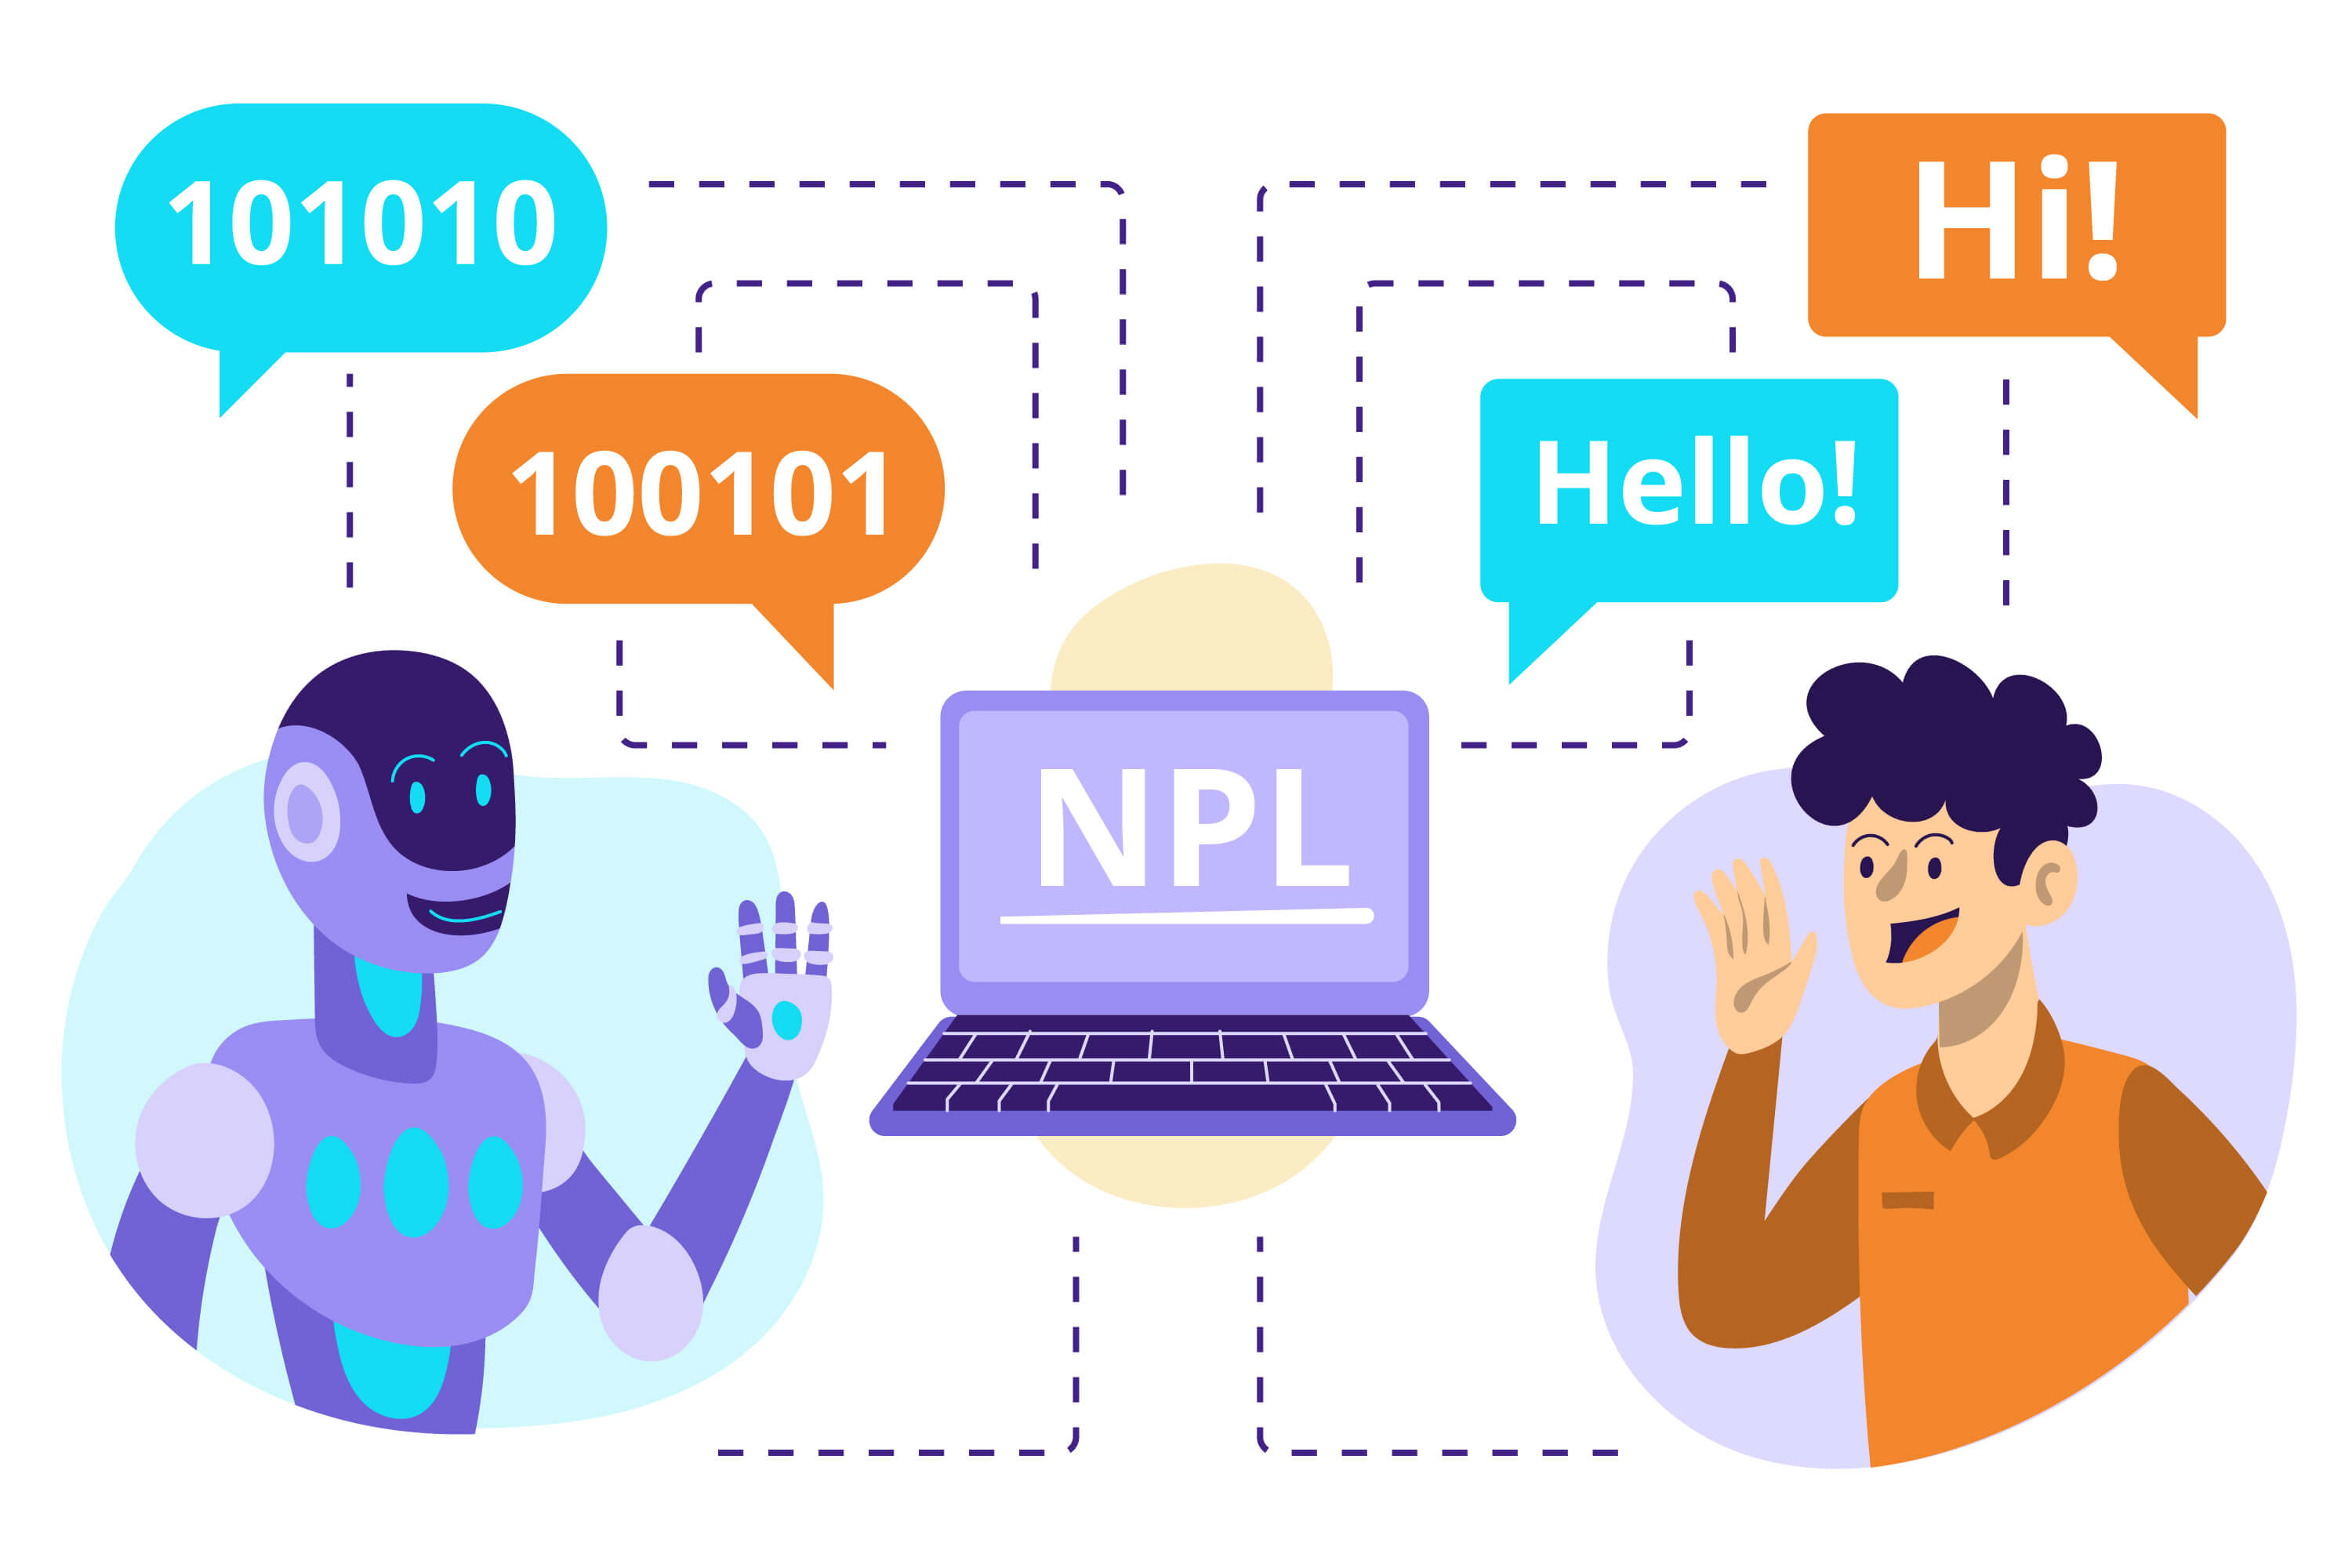 Natural Language Processing Services